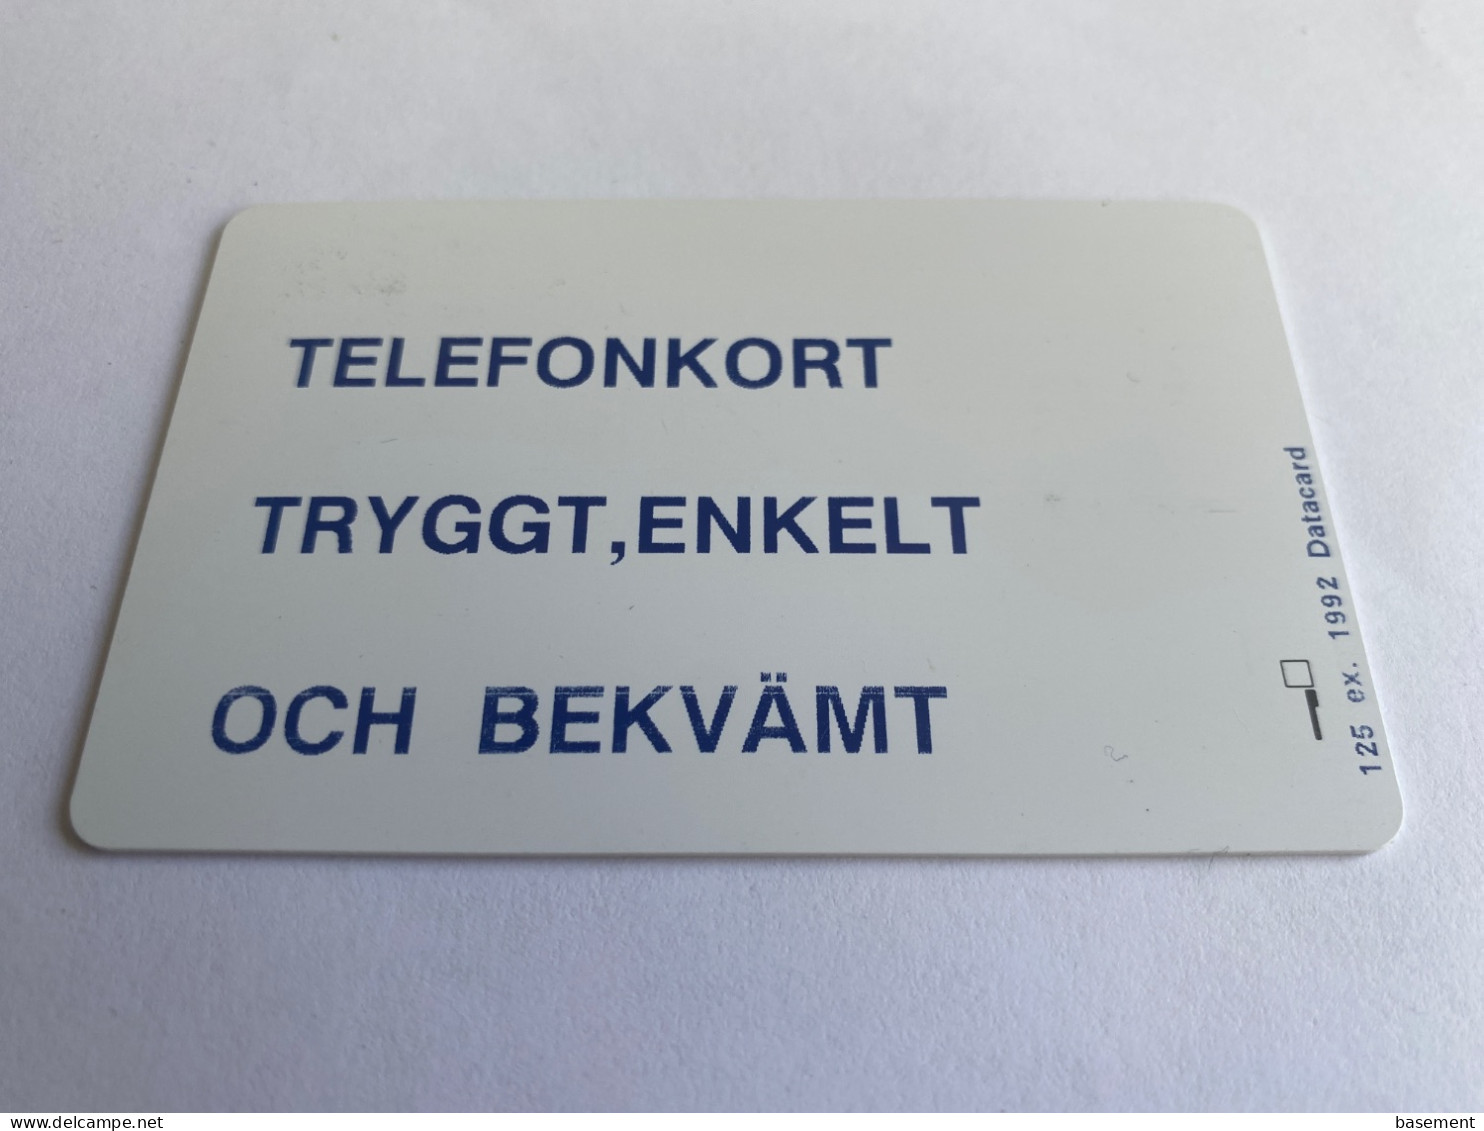 - 1 - Sweden Televerket Region Väst Offentlig Telecom - Zweden